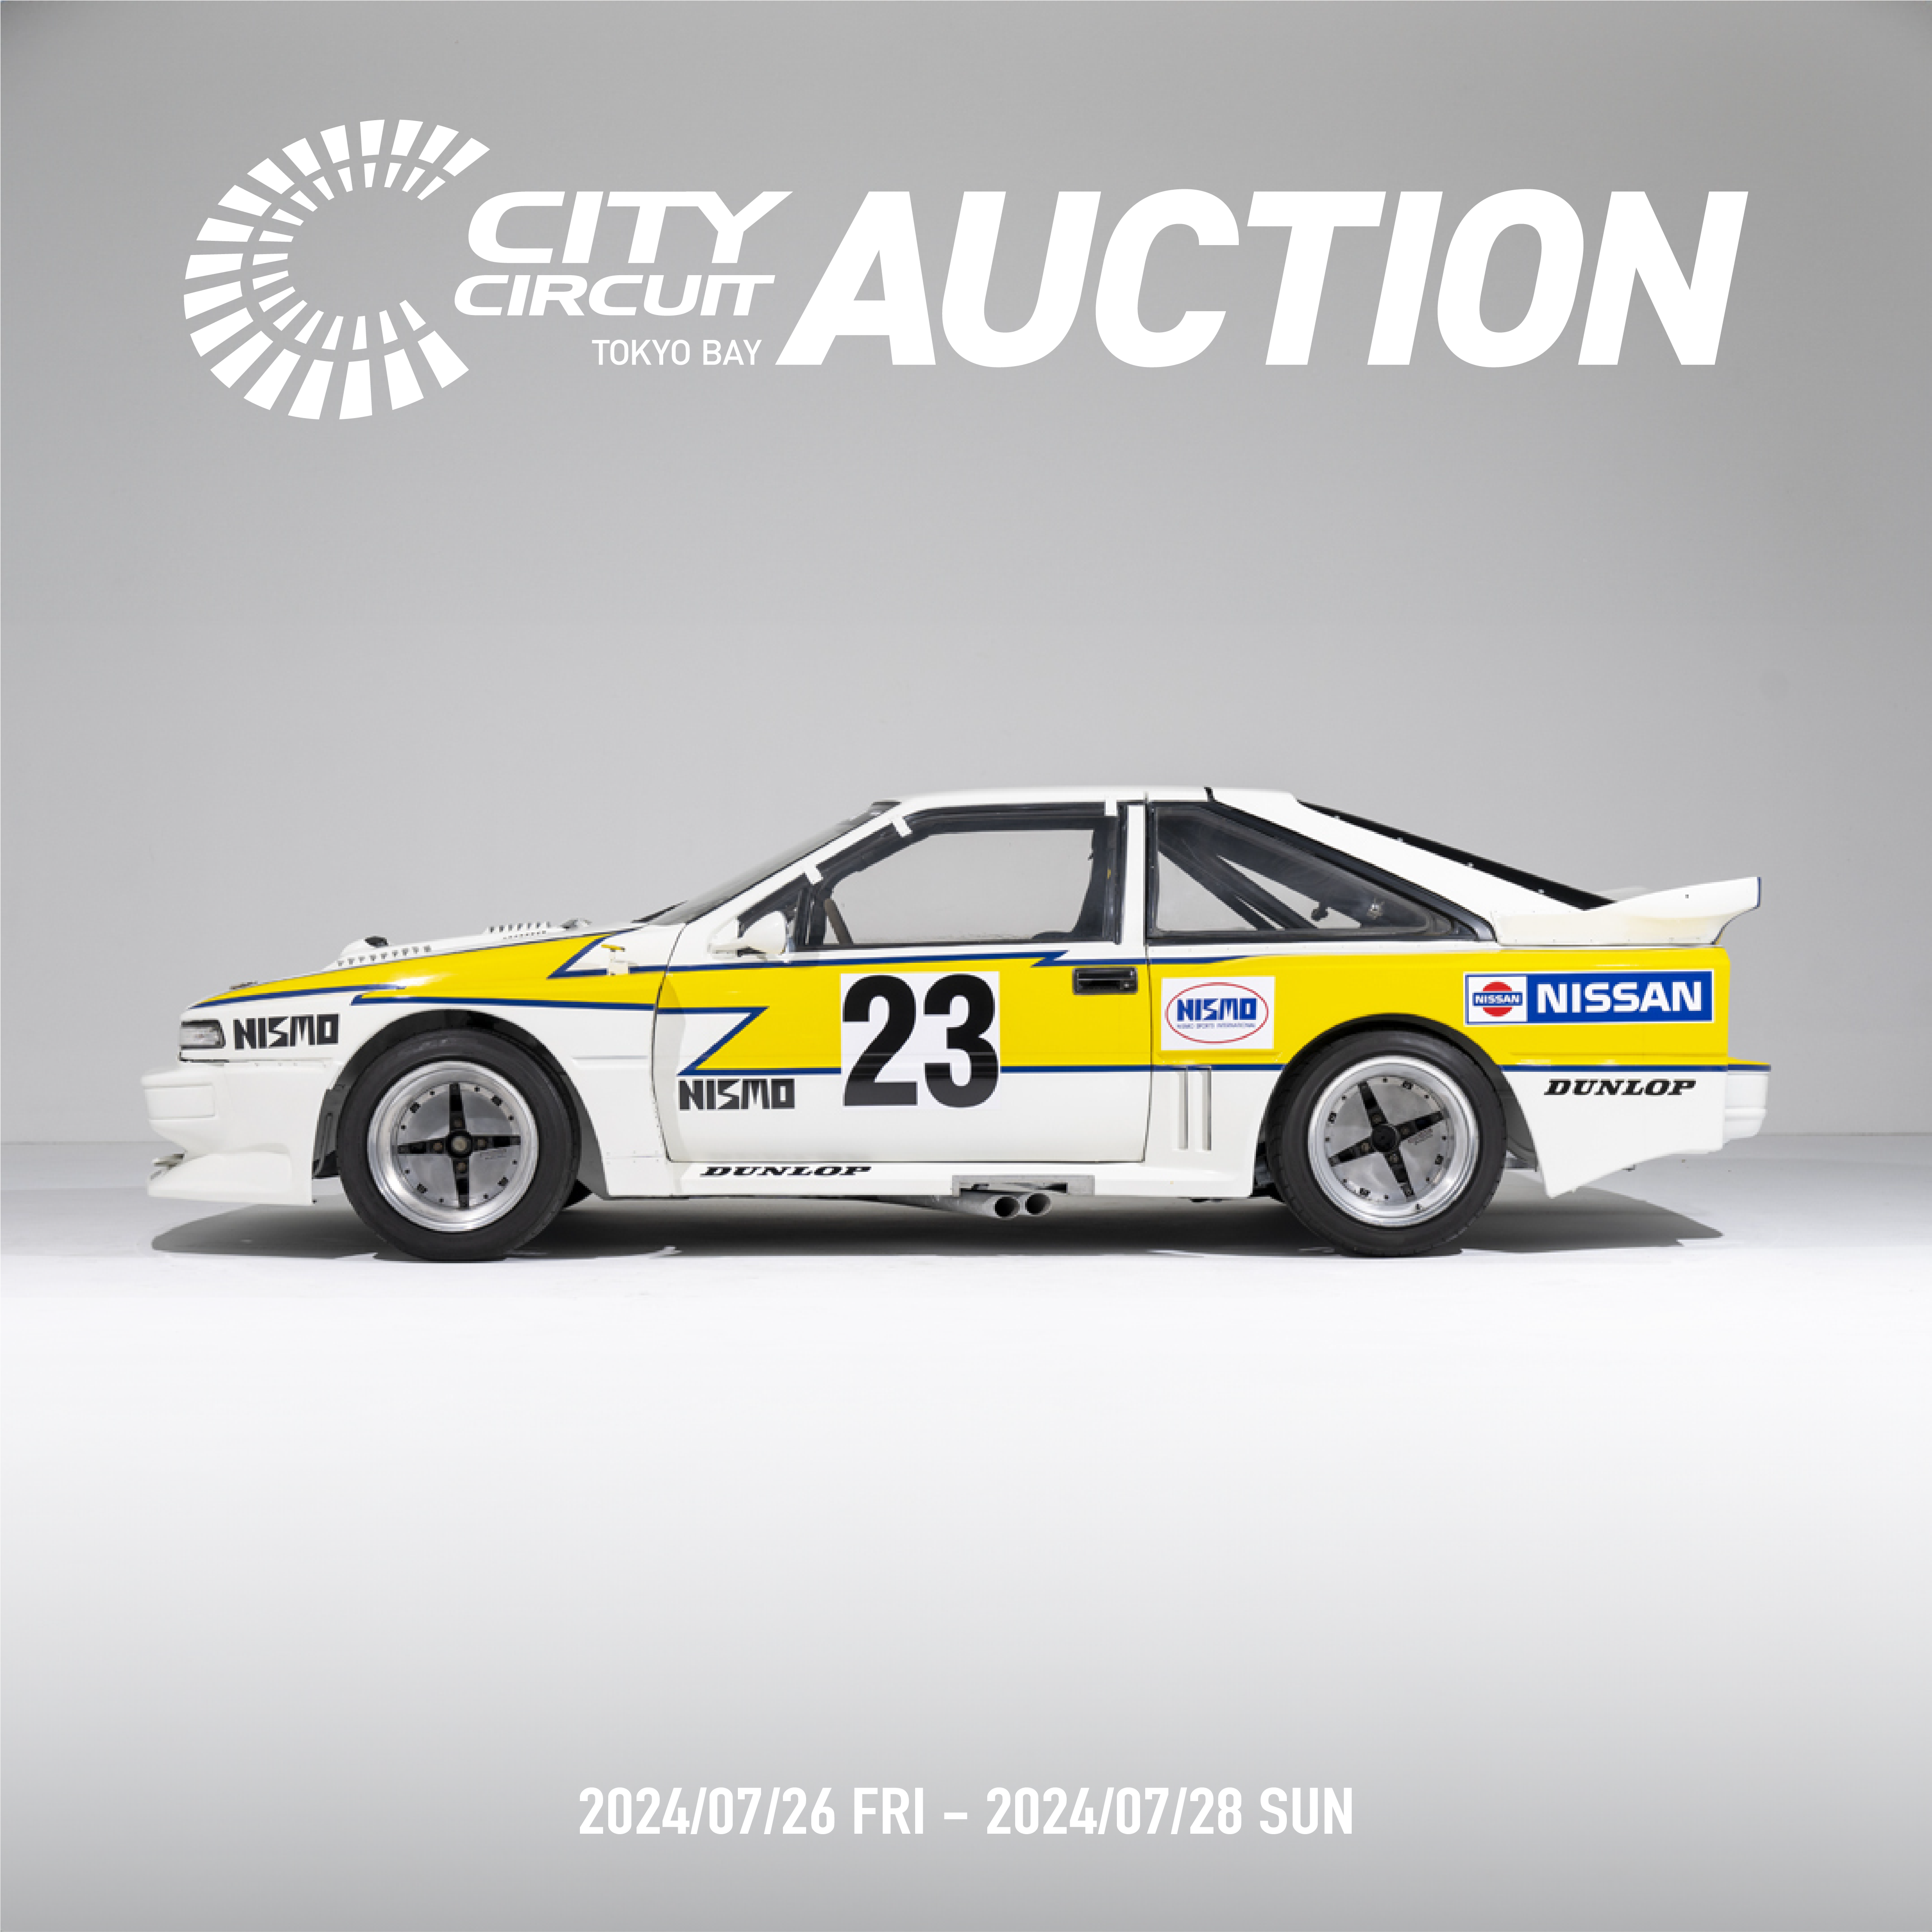 City Circuit Tokyo Bay Auction